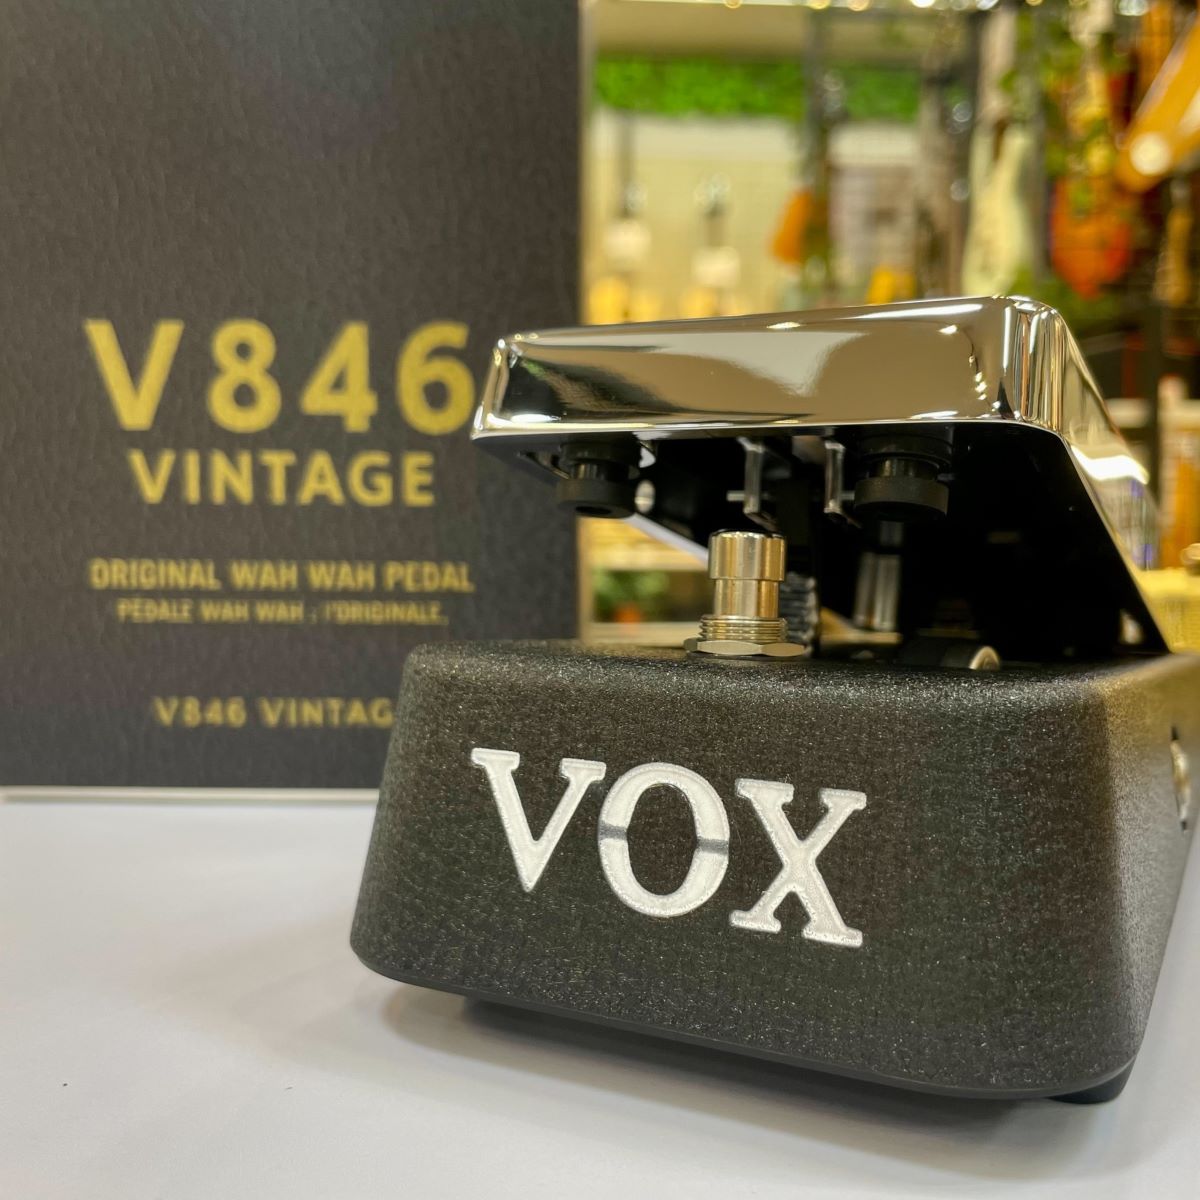 VOX V846 VINTAGE ワウペダル 【在庫あり】 ボックス 【 イオンモール佐久平店 】 | 島村楽器オンラインストア